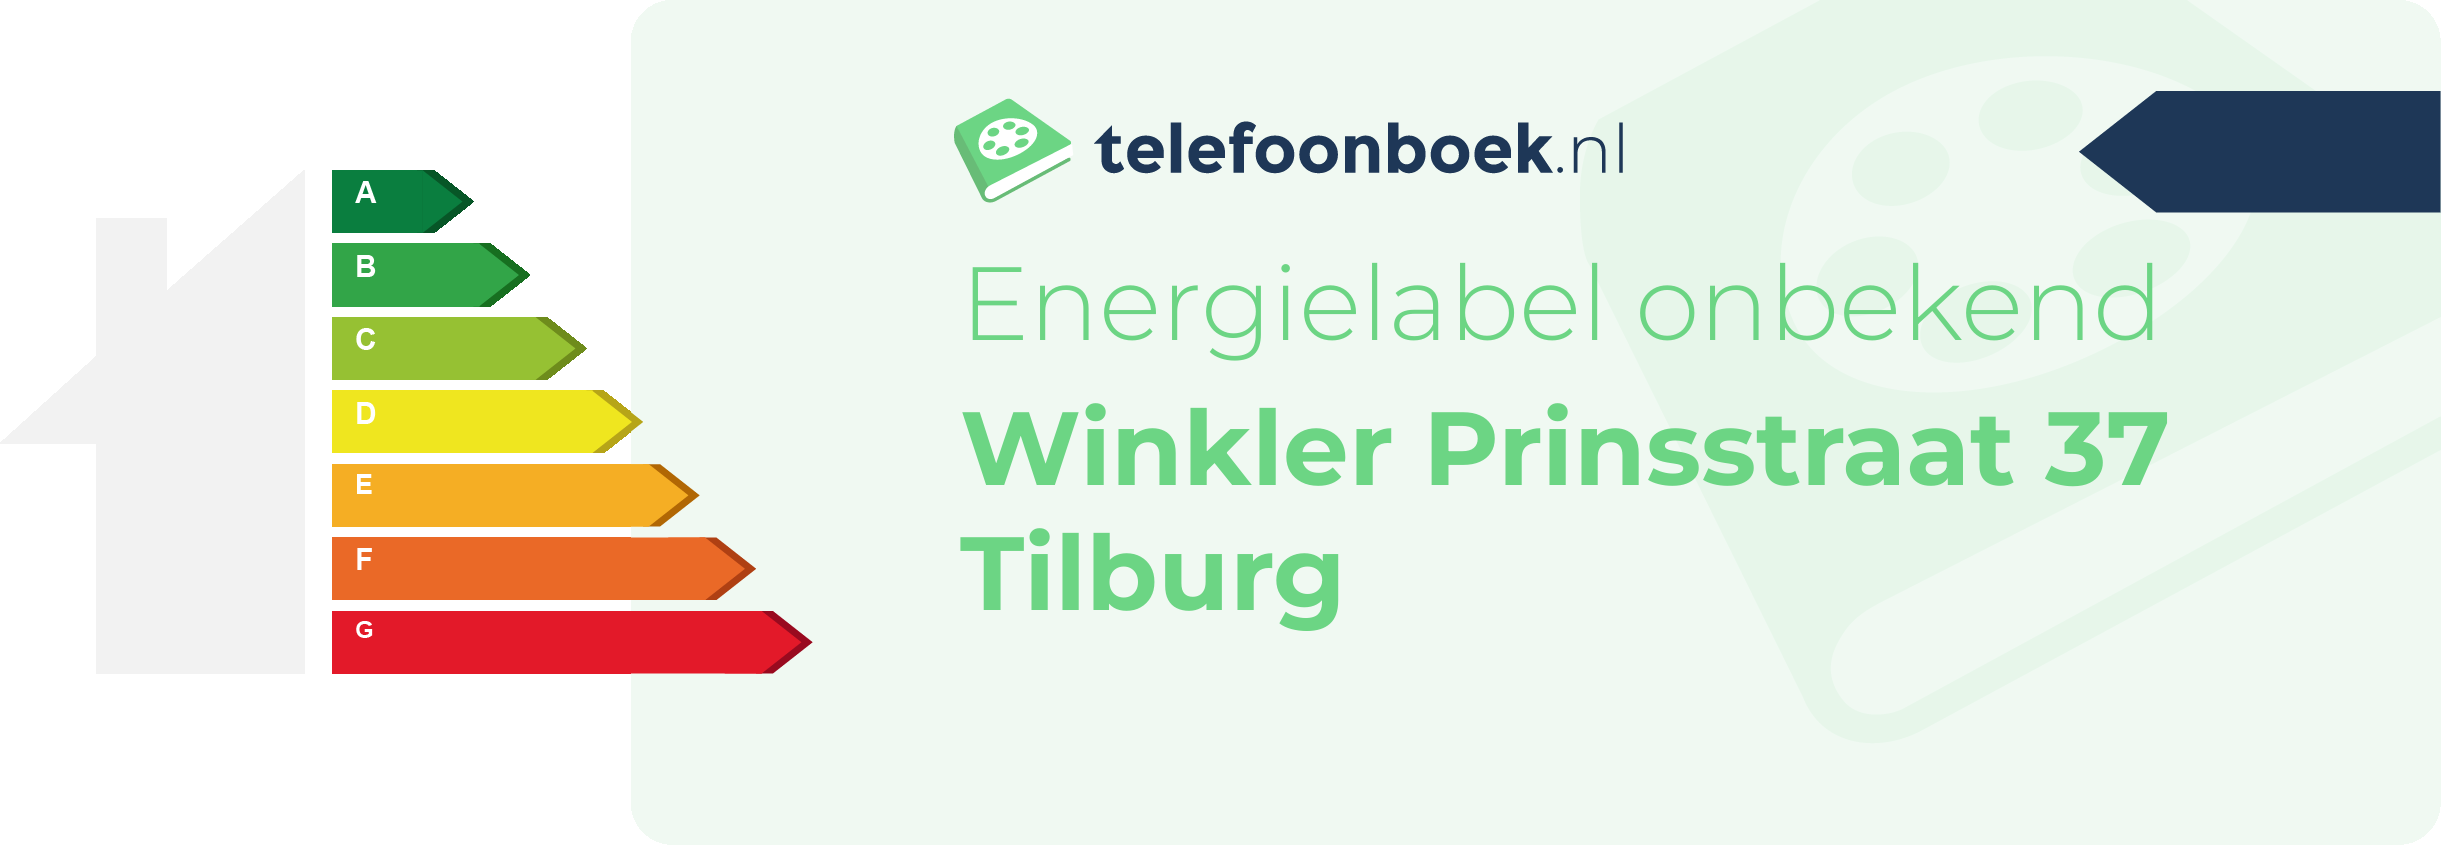 Energielabel Winkler Prinsstraat 37 Tilburg